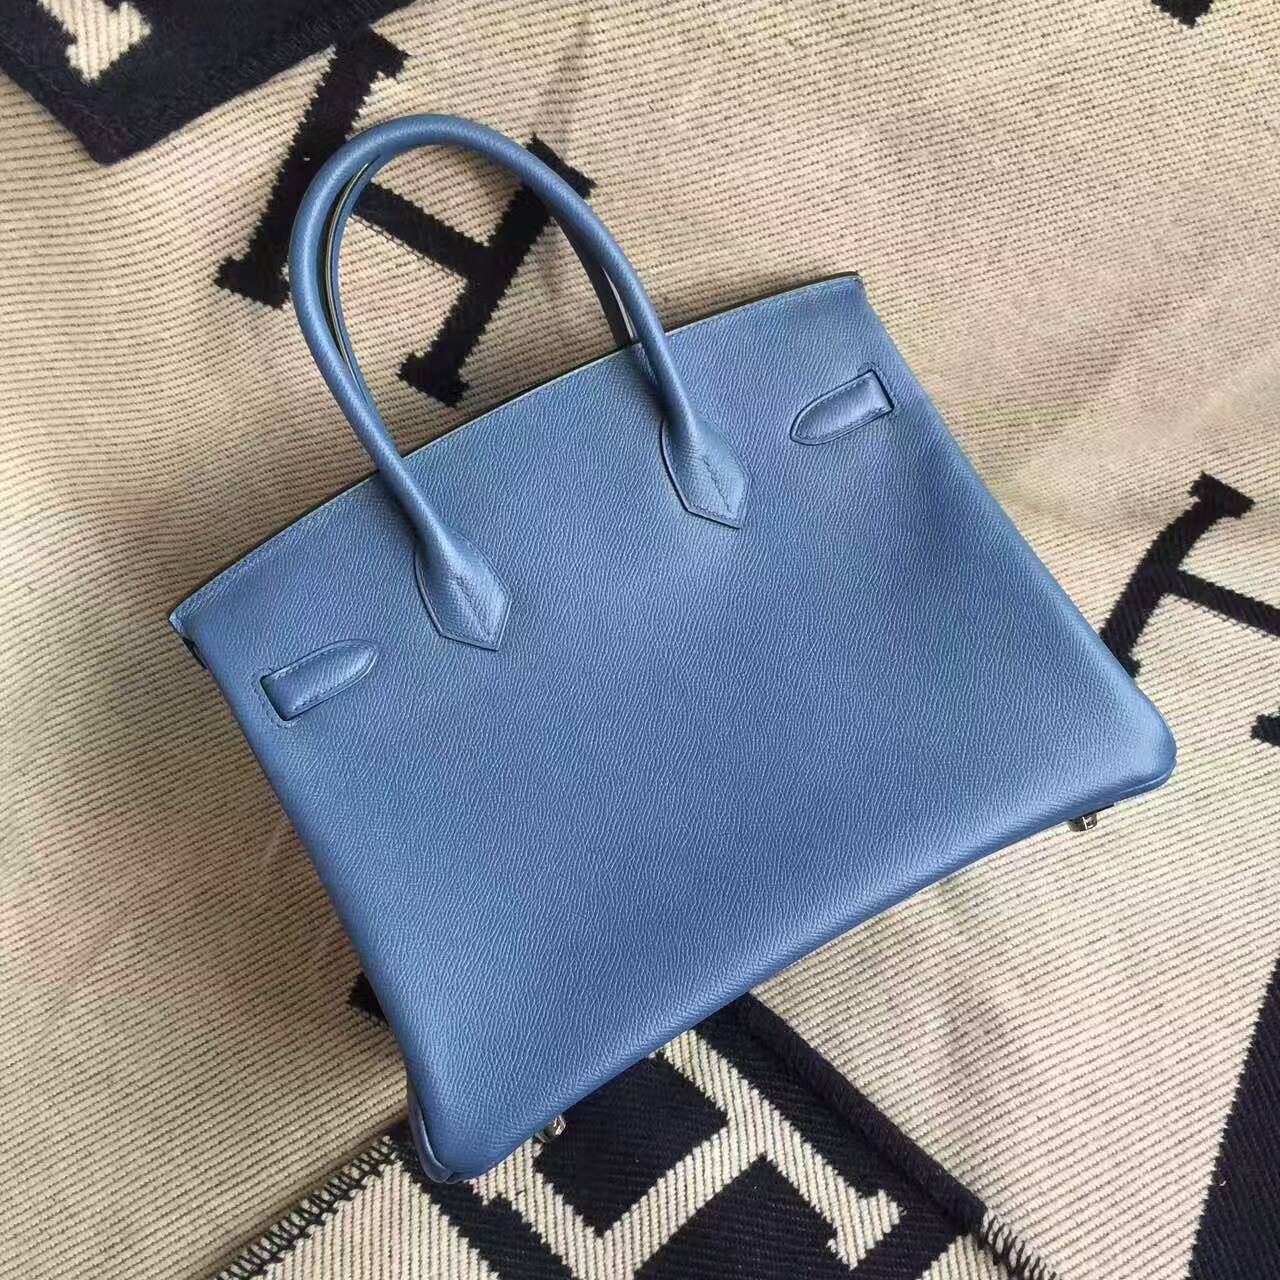 Sale Hermes Epsom Calfskin Leather Birkin Bag 30cm in R2 Agate Blue